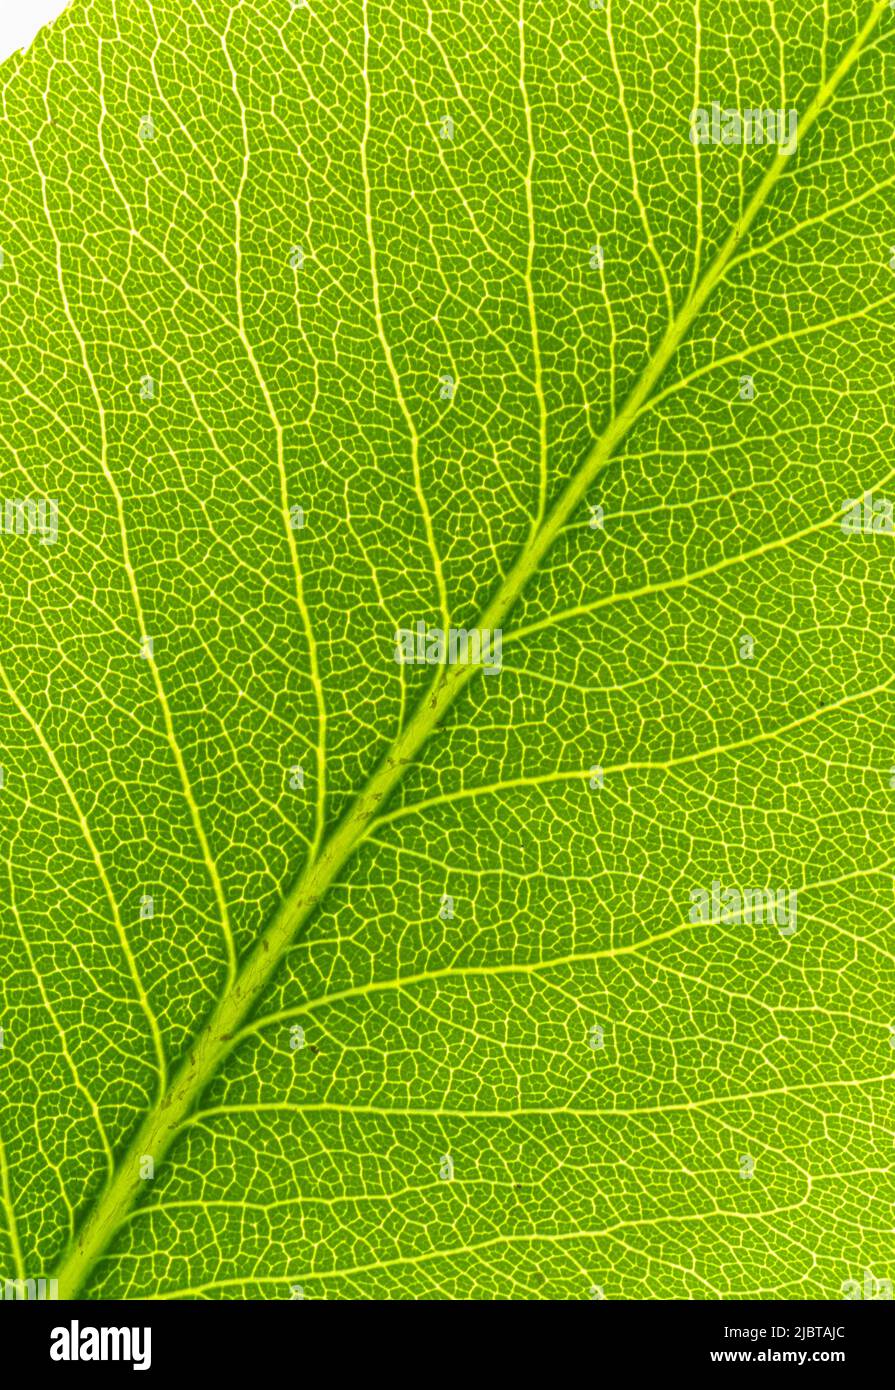 Pear tree leaf Stock Photo